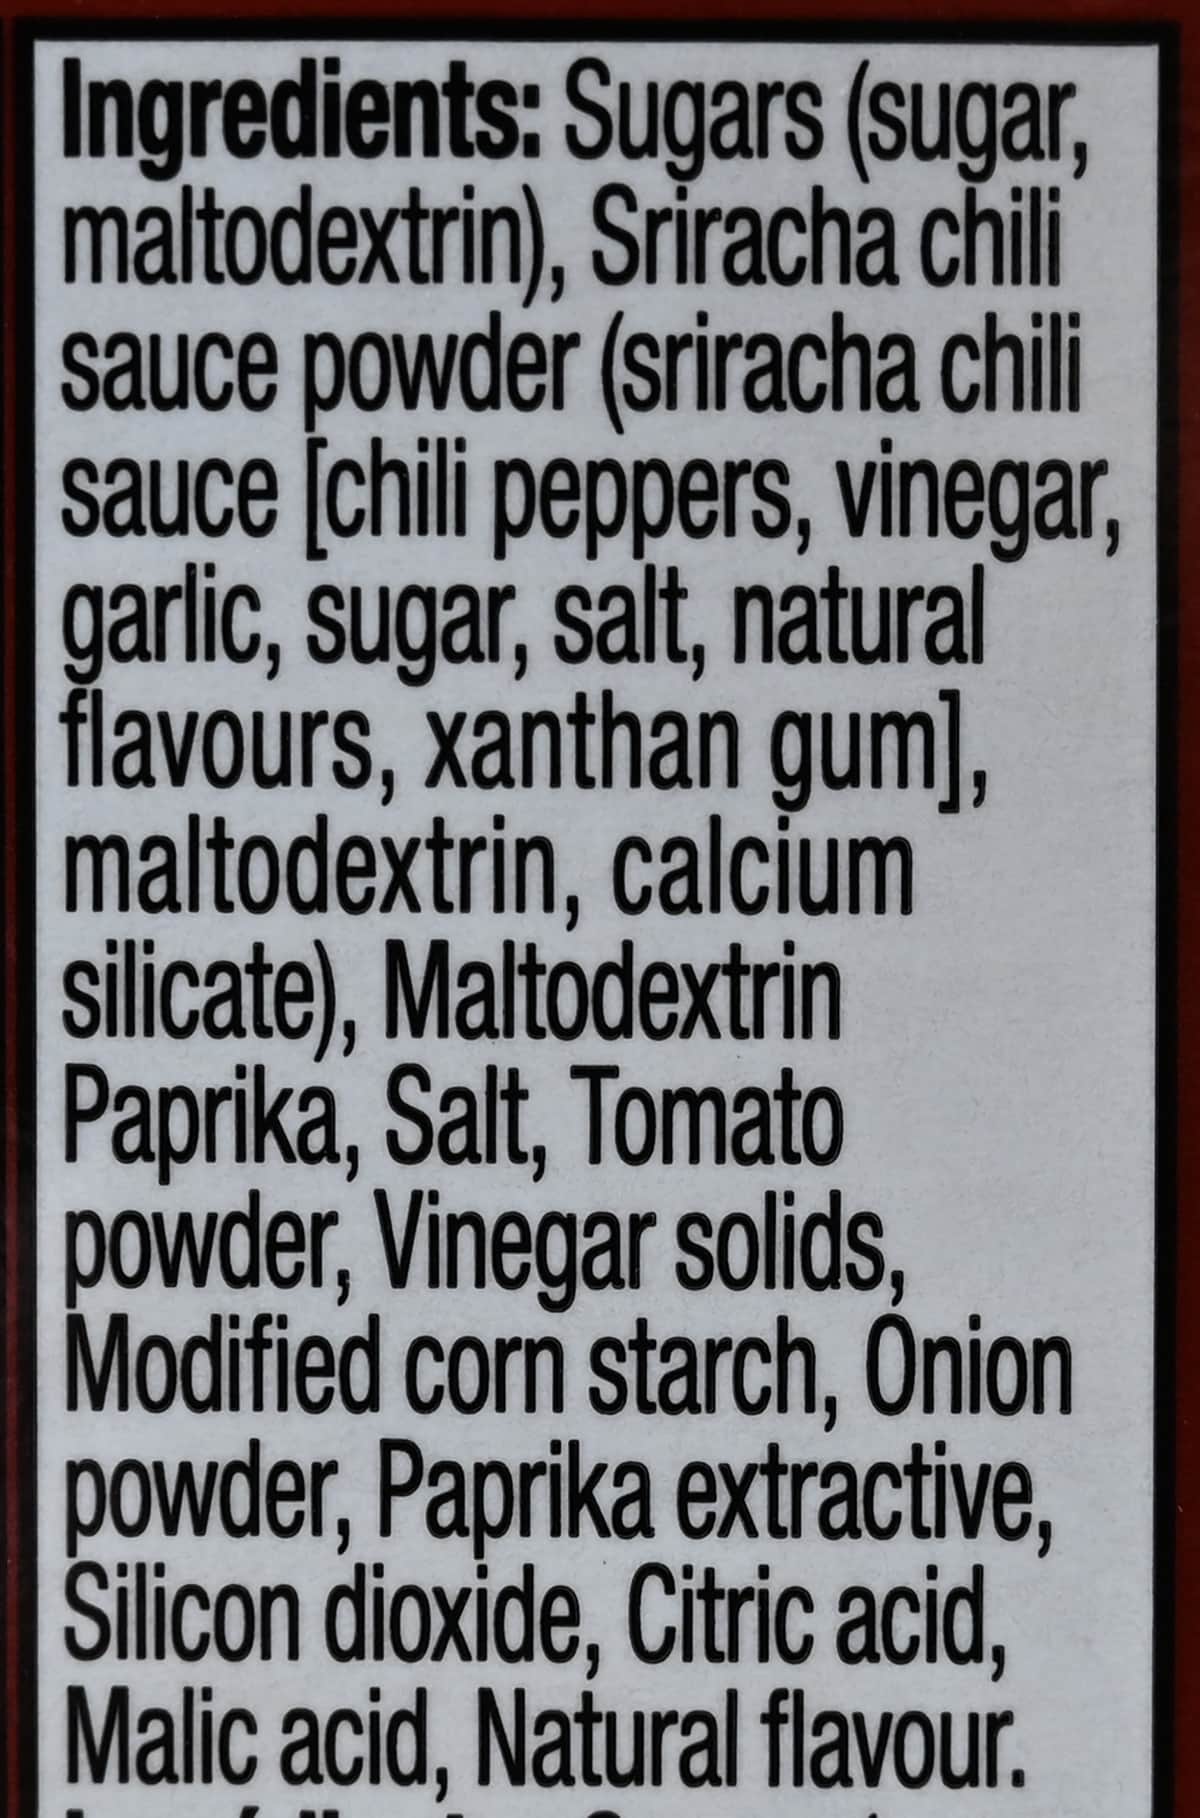 Image of the sriracha seasoning ingredients.